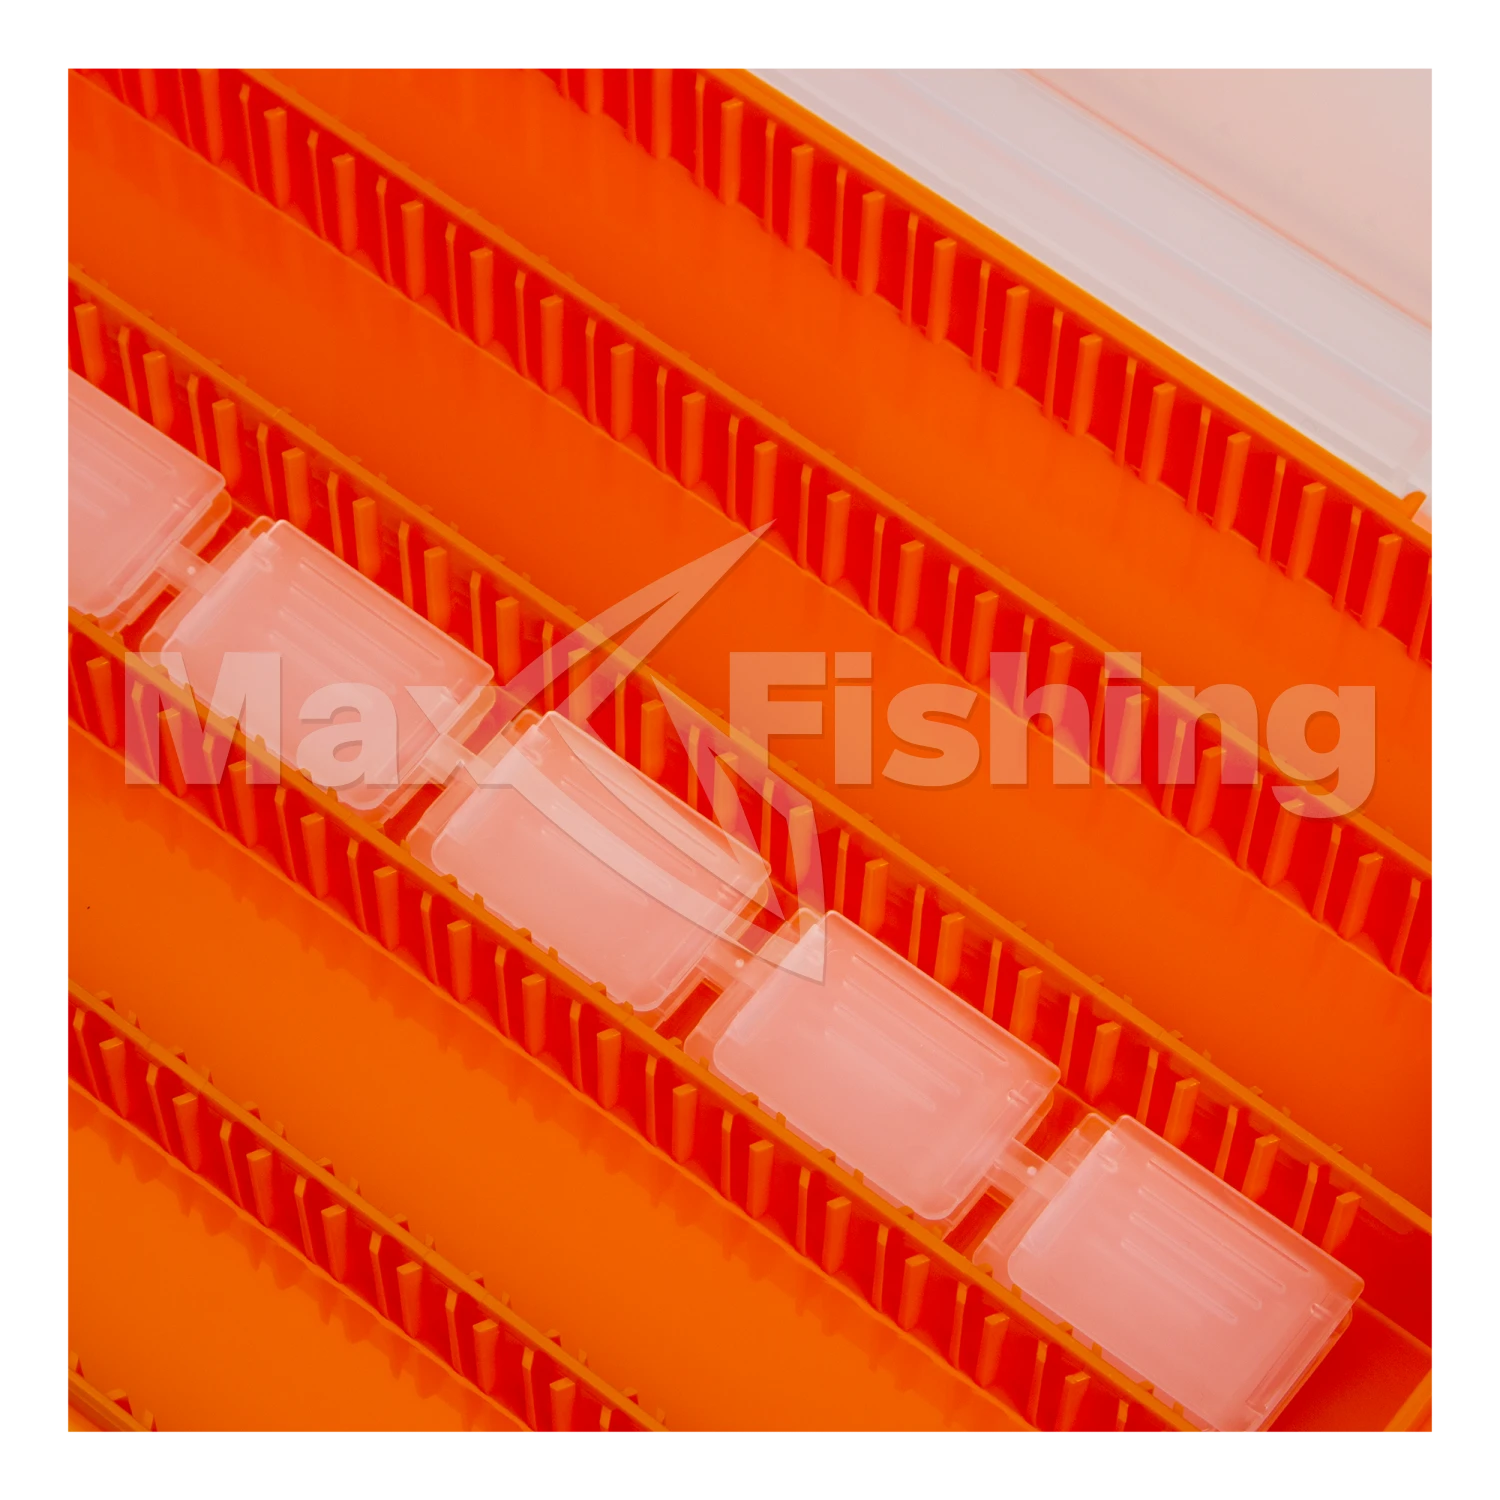 Коробка Fisherbox 250sh slim orange